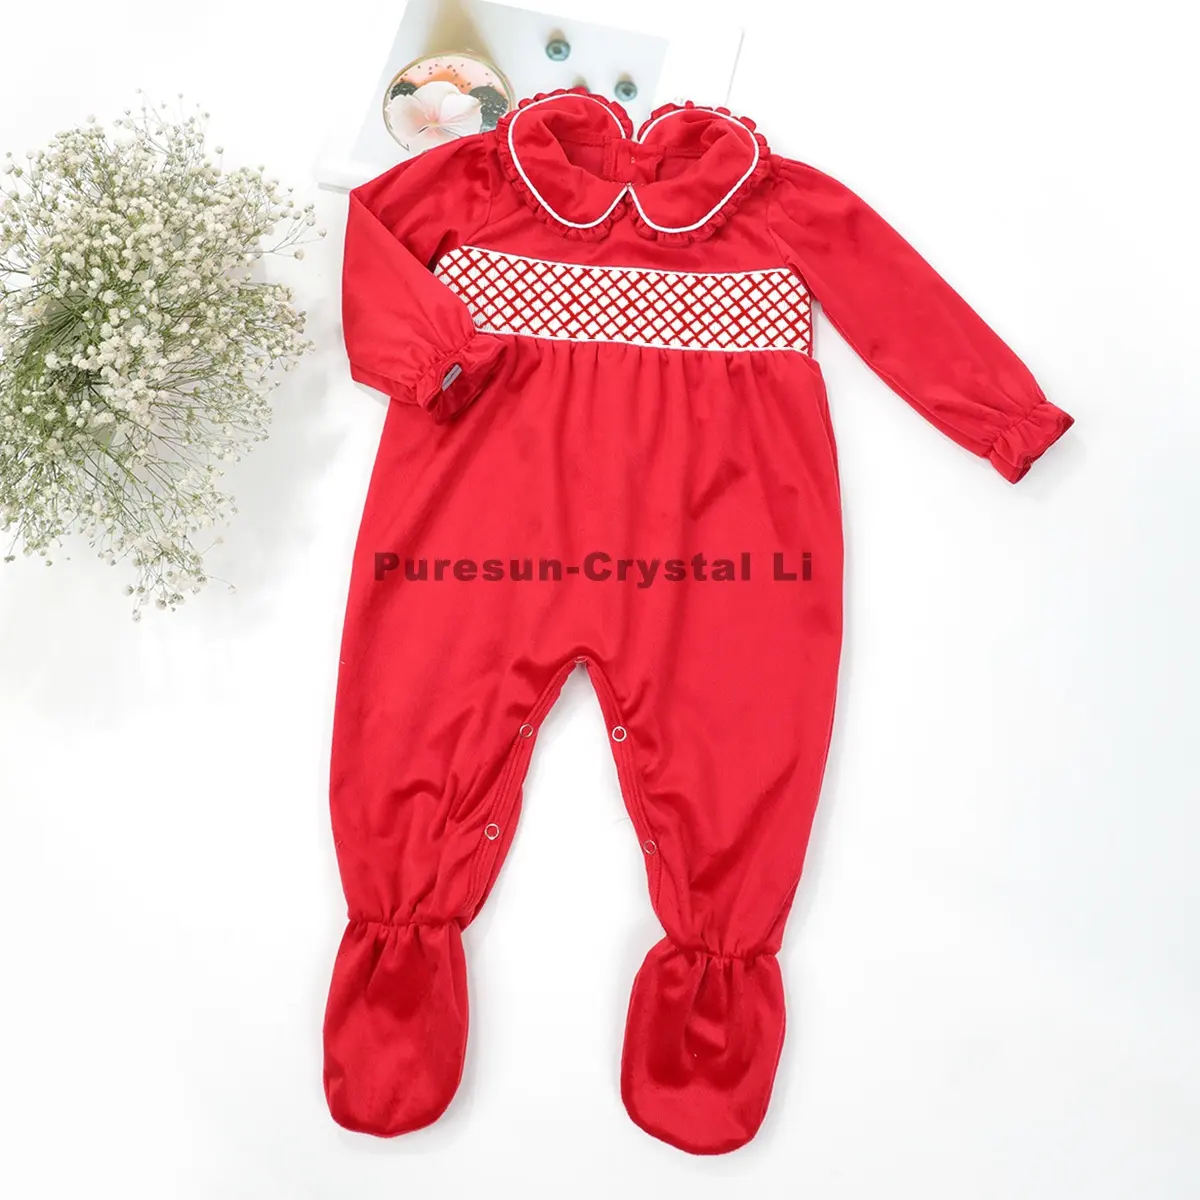 Puresun New Arrival Baby Girl's Long Sleeve Romper Red Velvet Material Casual Summer Smocked Pajamas Ruffle Smocked Baby Grow